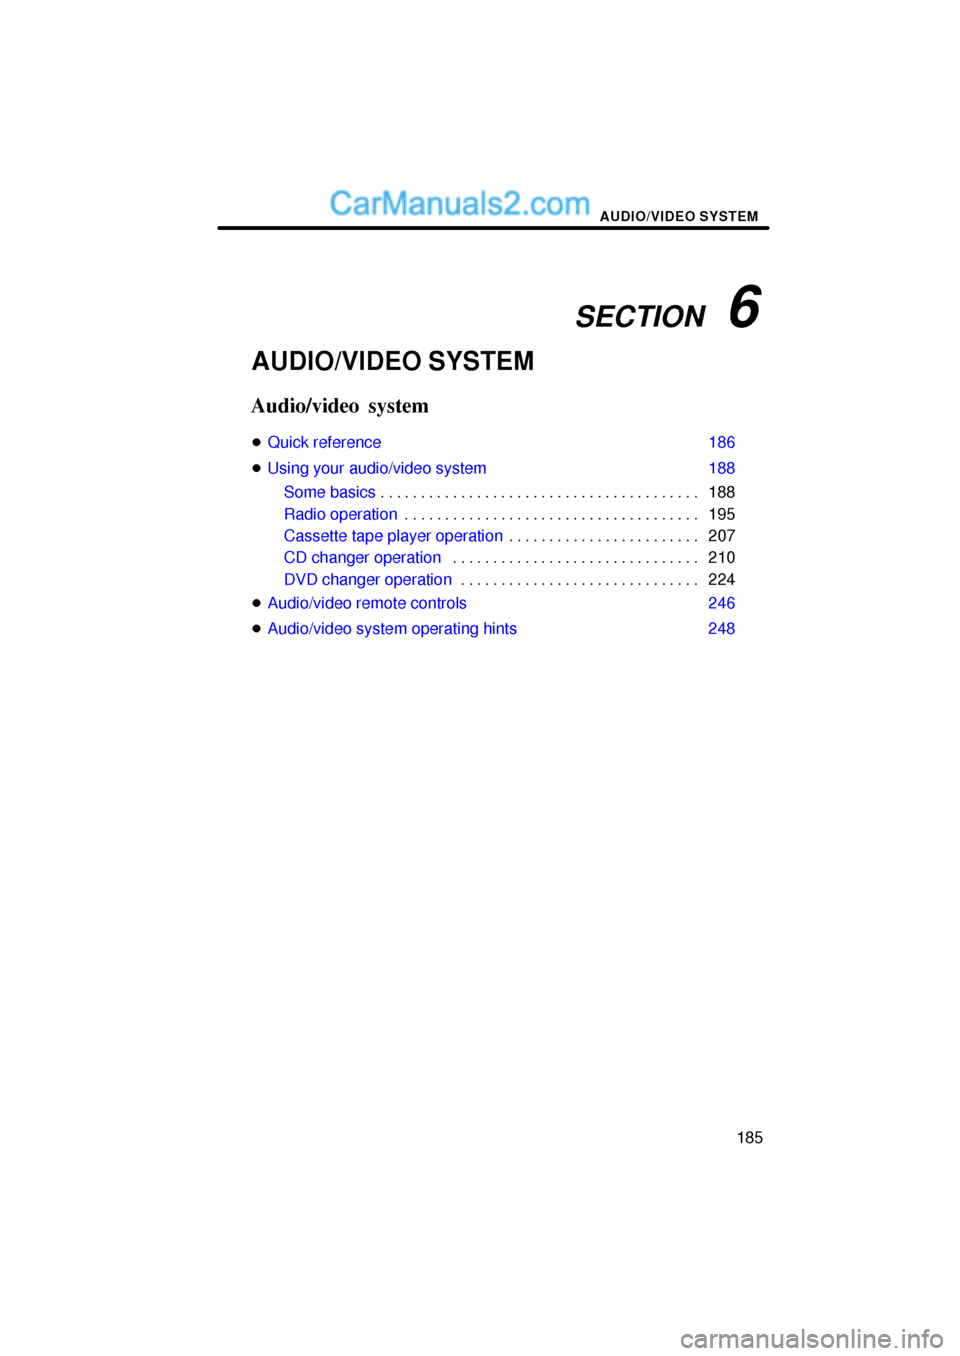 Lexus ES350 2008  Audio/video System SECTION   6
AUDIO/VIDEO SYSTEM
185
AUDIO/VIDEO SYSTEM
Audio/video system
Quick reference 186
Using your audio/video system 188
Some basics188 . . . . . . . . . . . . . . . . . . . . . . . . . . . . 